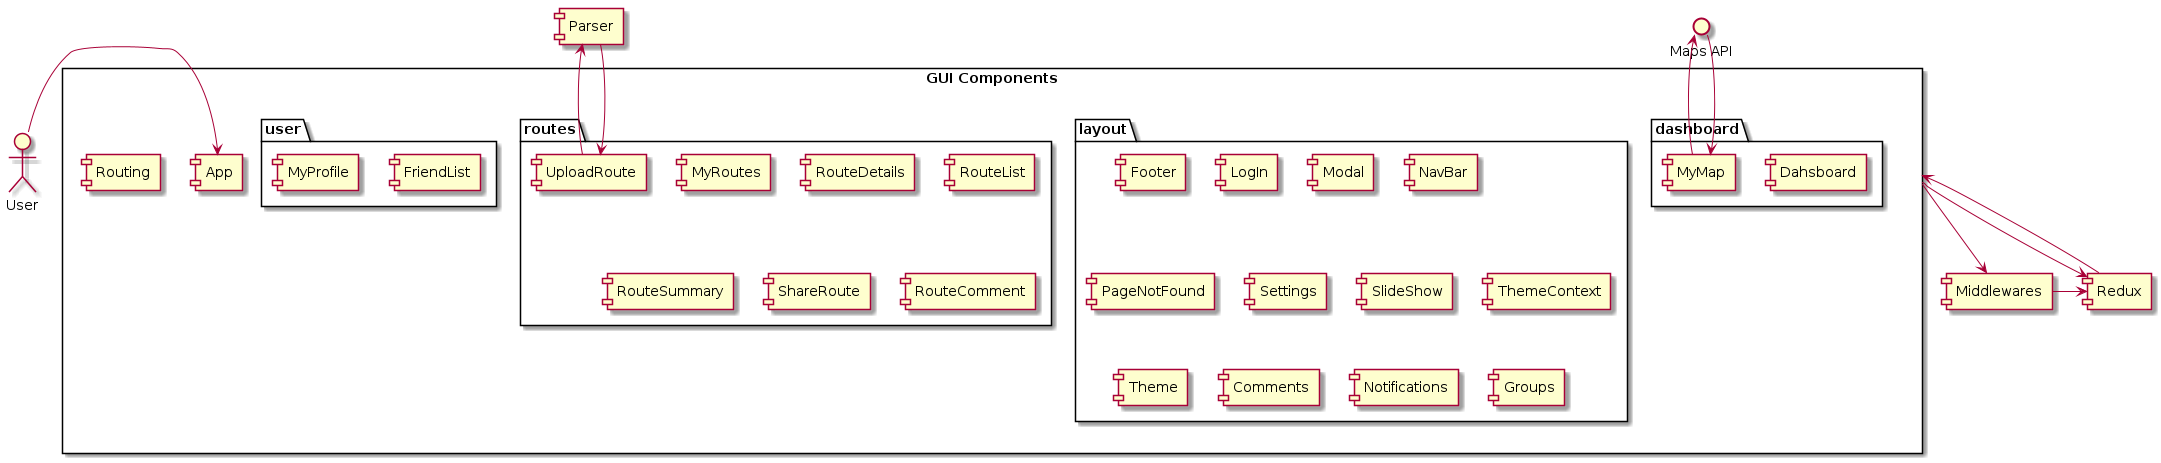 Whitebox React GUI Components